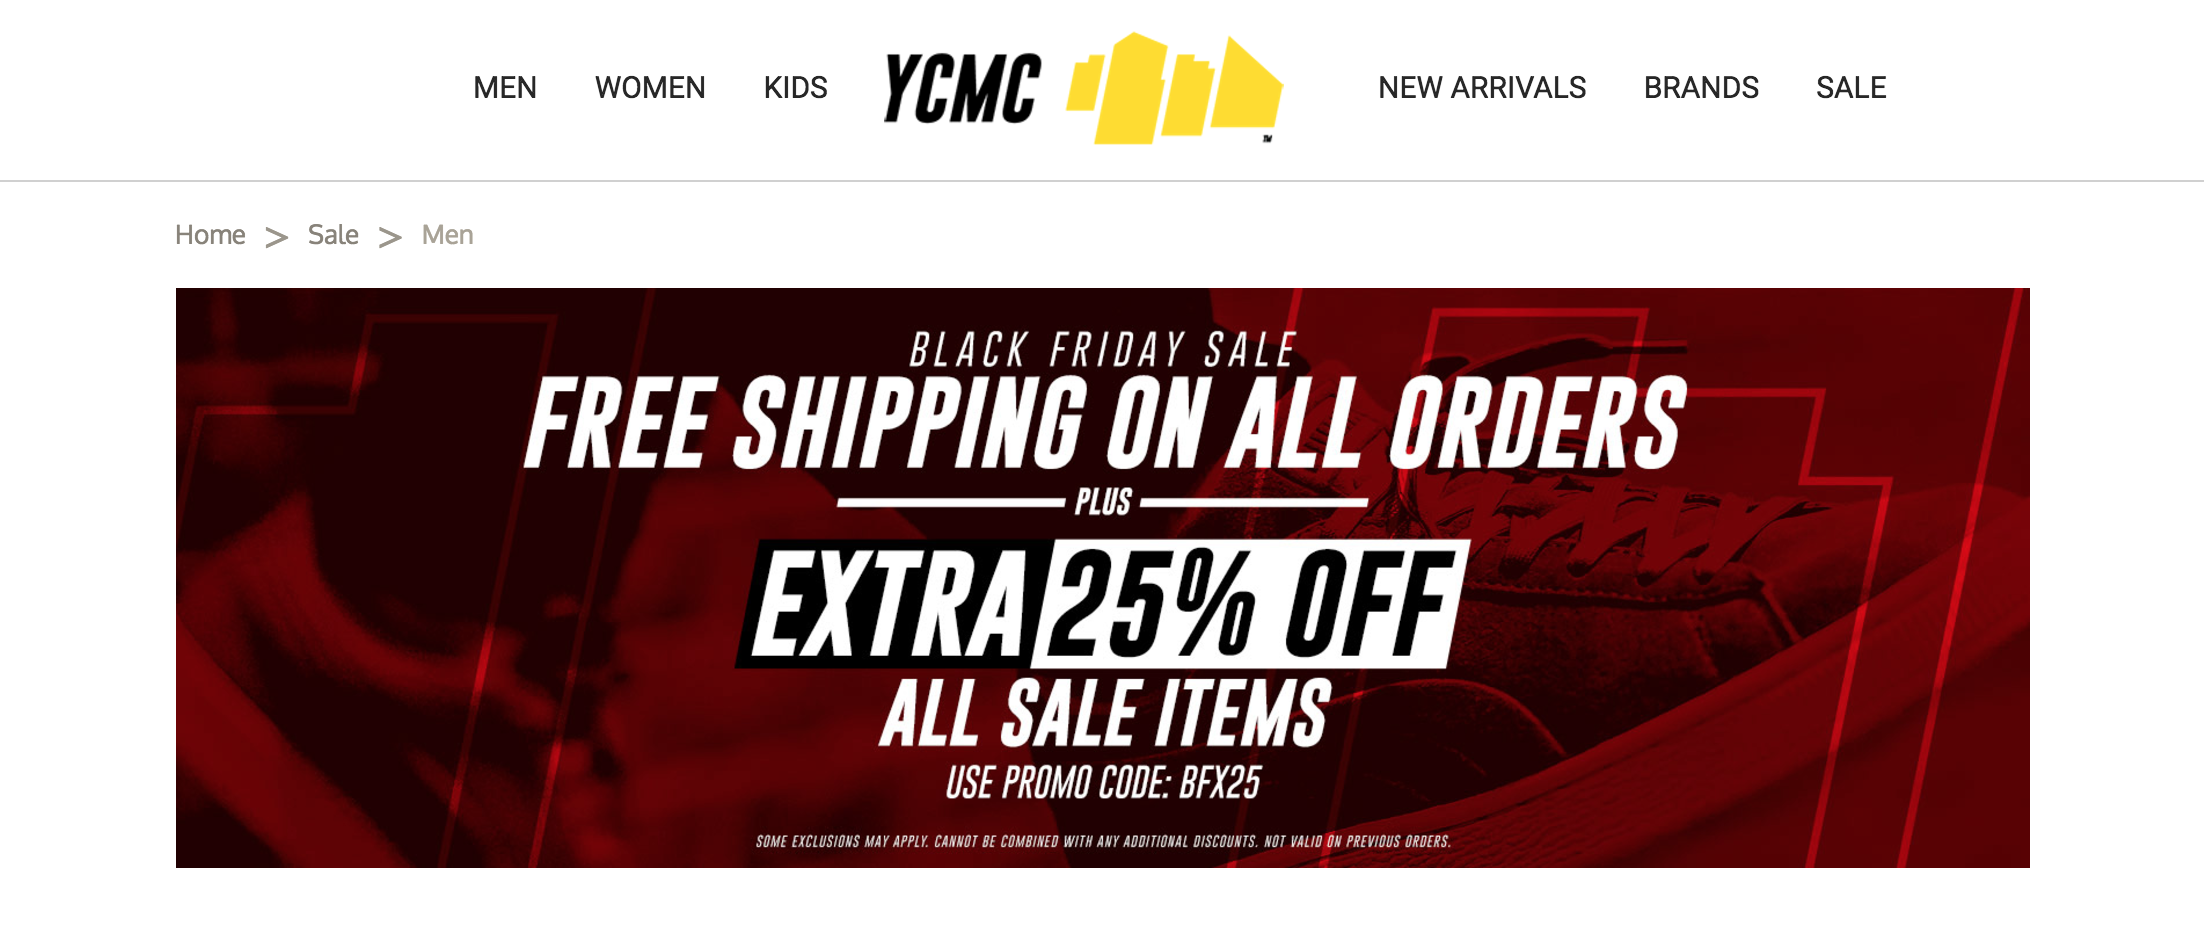 YCMC Black Friday Sale